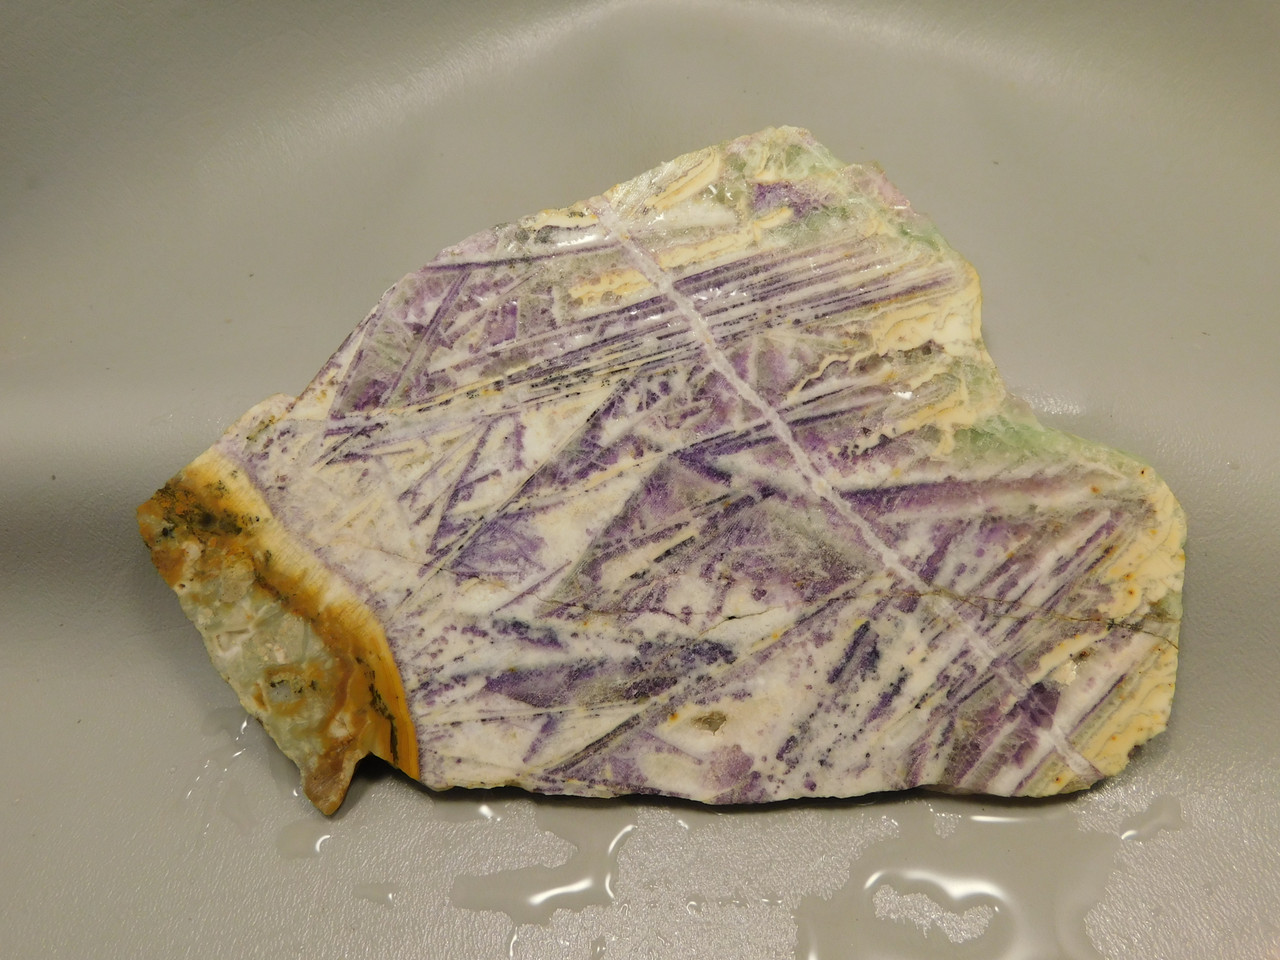 Purple Sagenite Stone Slab Cabbing Lapidary Rough Rock #O6